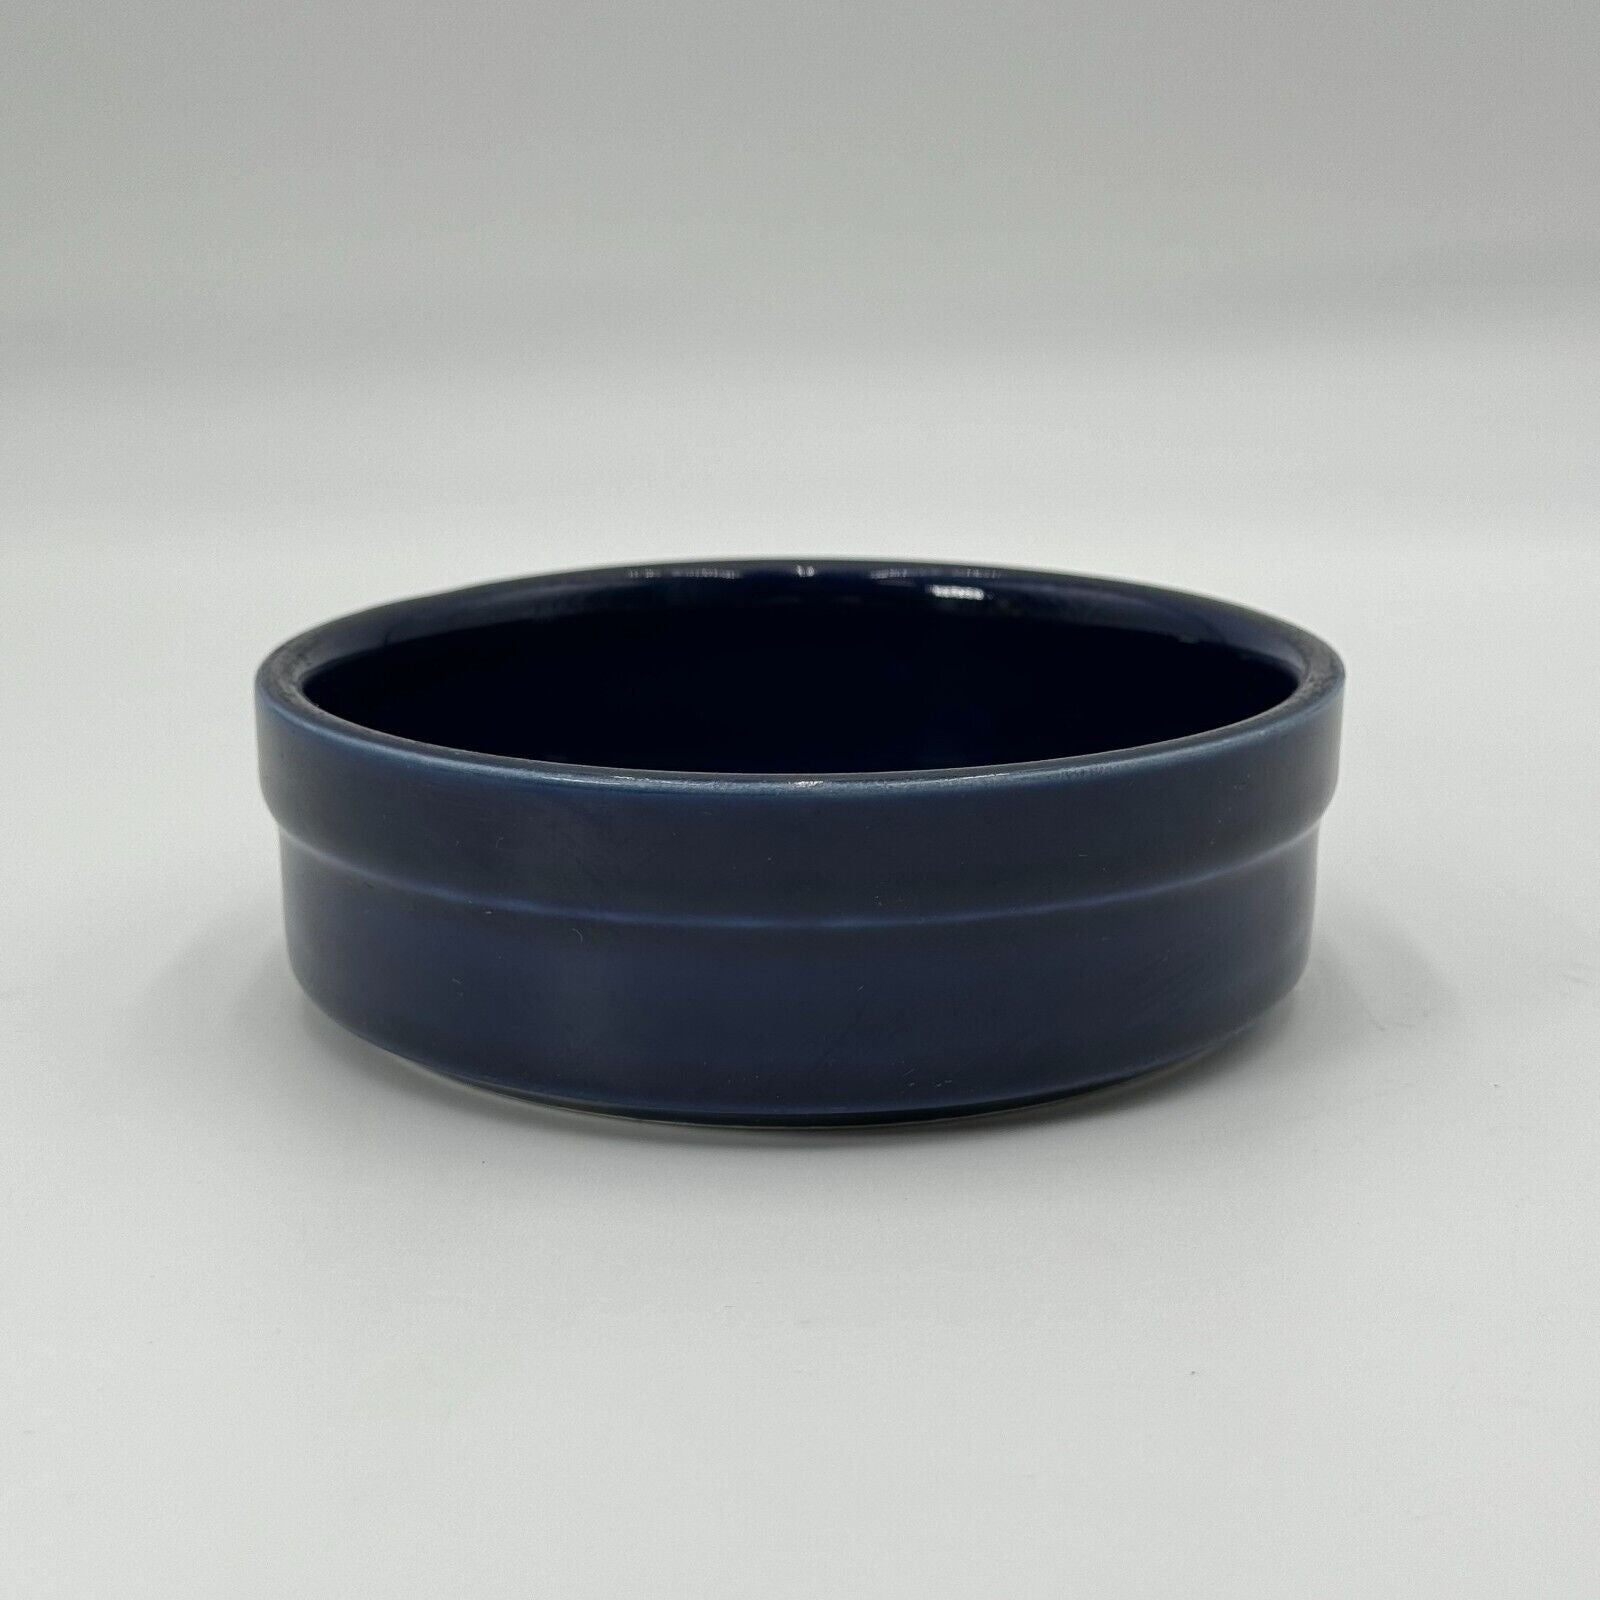 Vintage Pfaltzgraff 009 Blue Bowl 5.5” Oven & Microwave Safe Made USA Stoneware